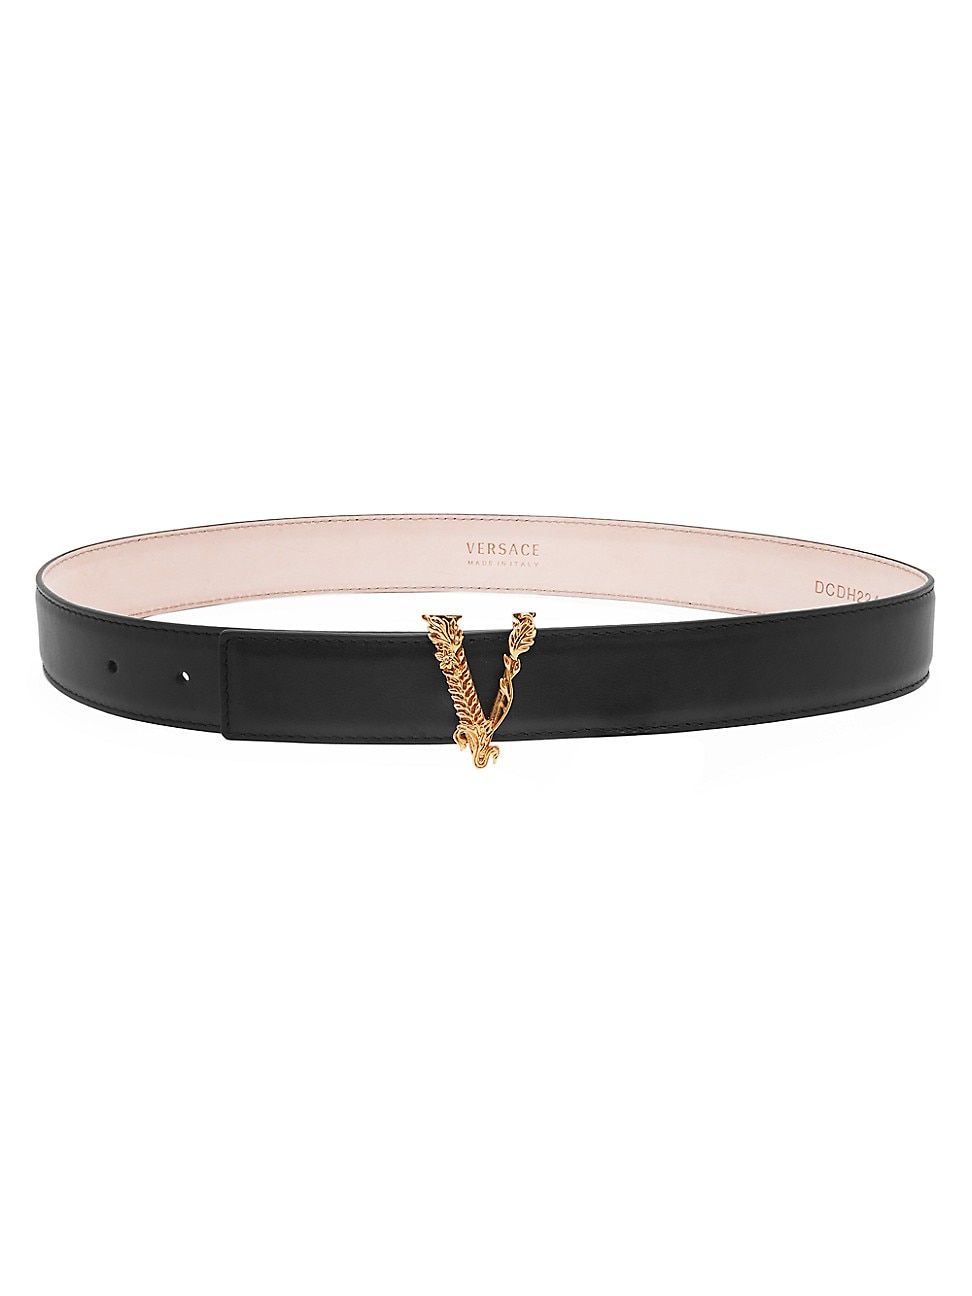 Versace Women's Virtus Leather Belt - Black - Size Large | Saks Fifth Avenue